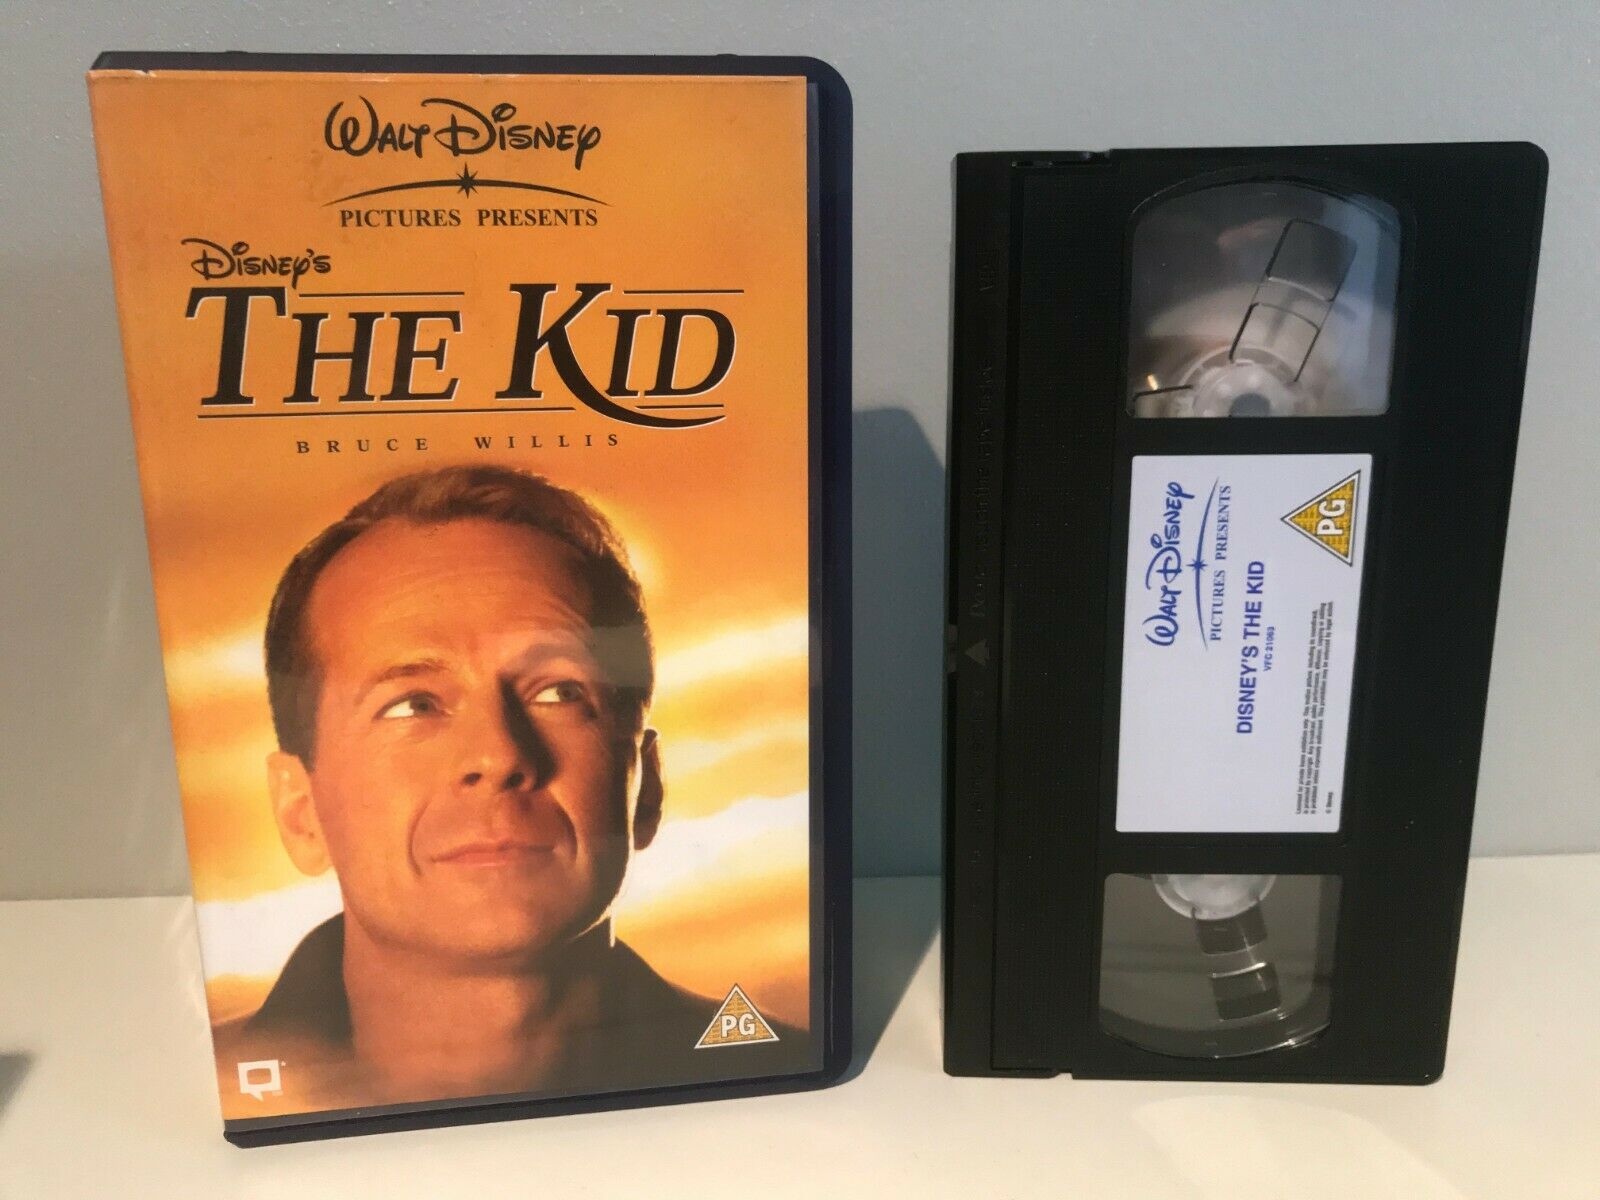 The Kid (2000); [Walt Disney]: Fantasy Comedy - Bruce Willis - Children's - VHS-